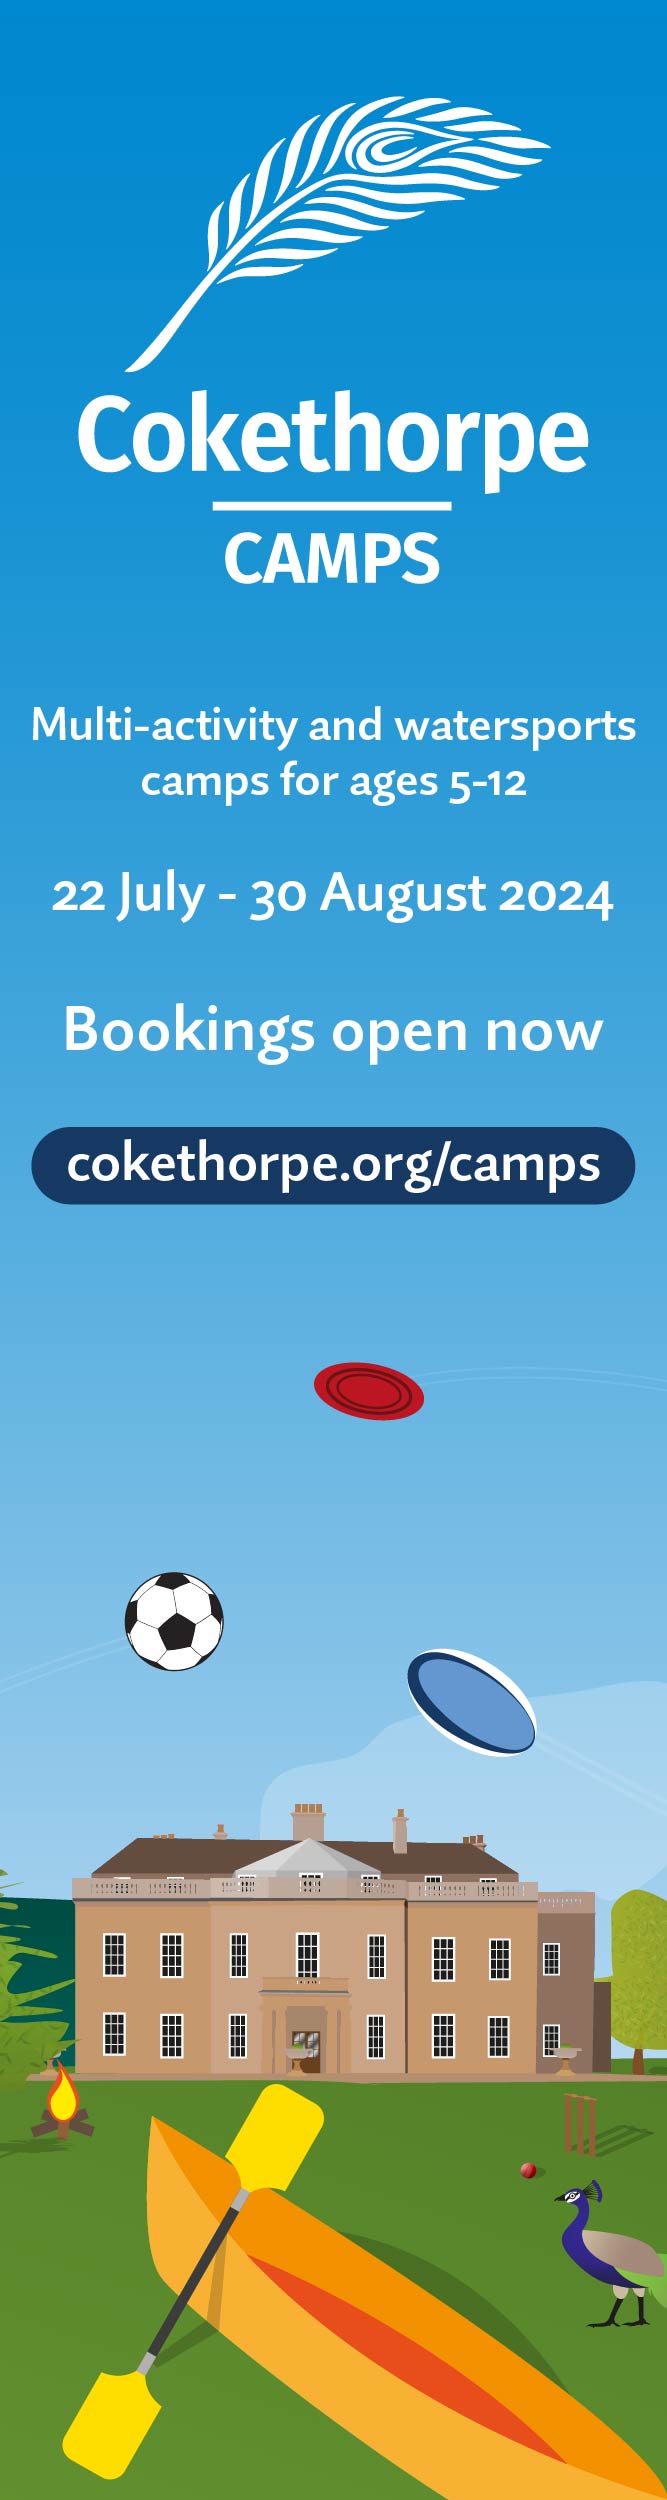 Cokethorpe Camps